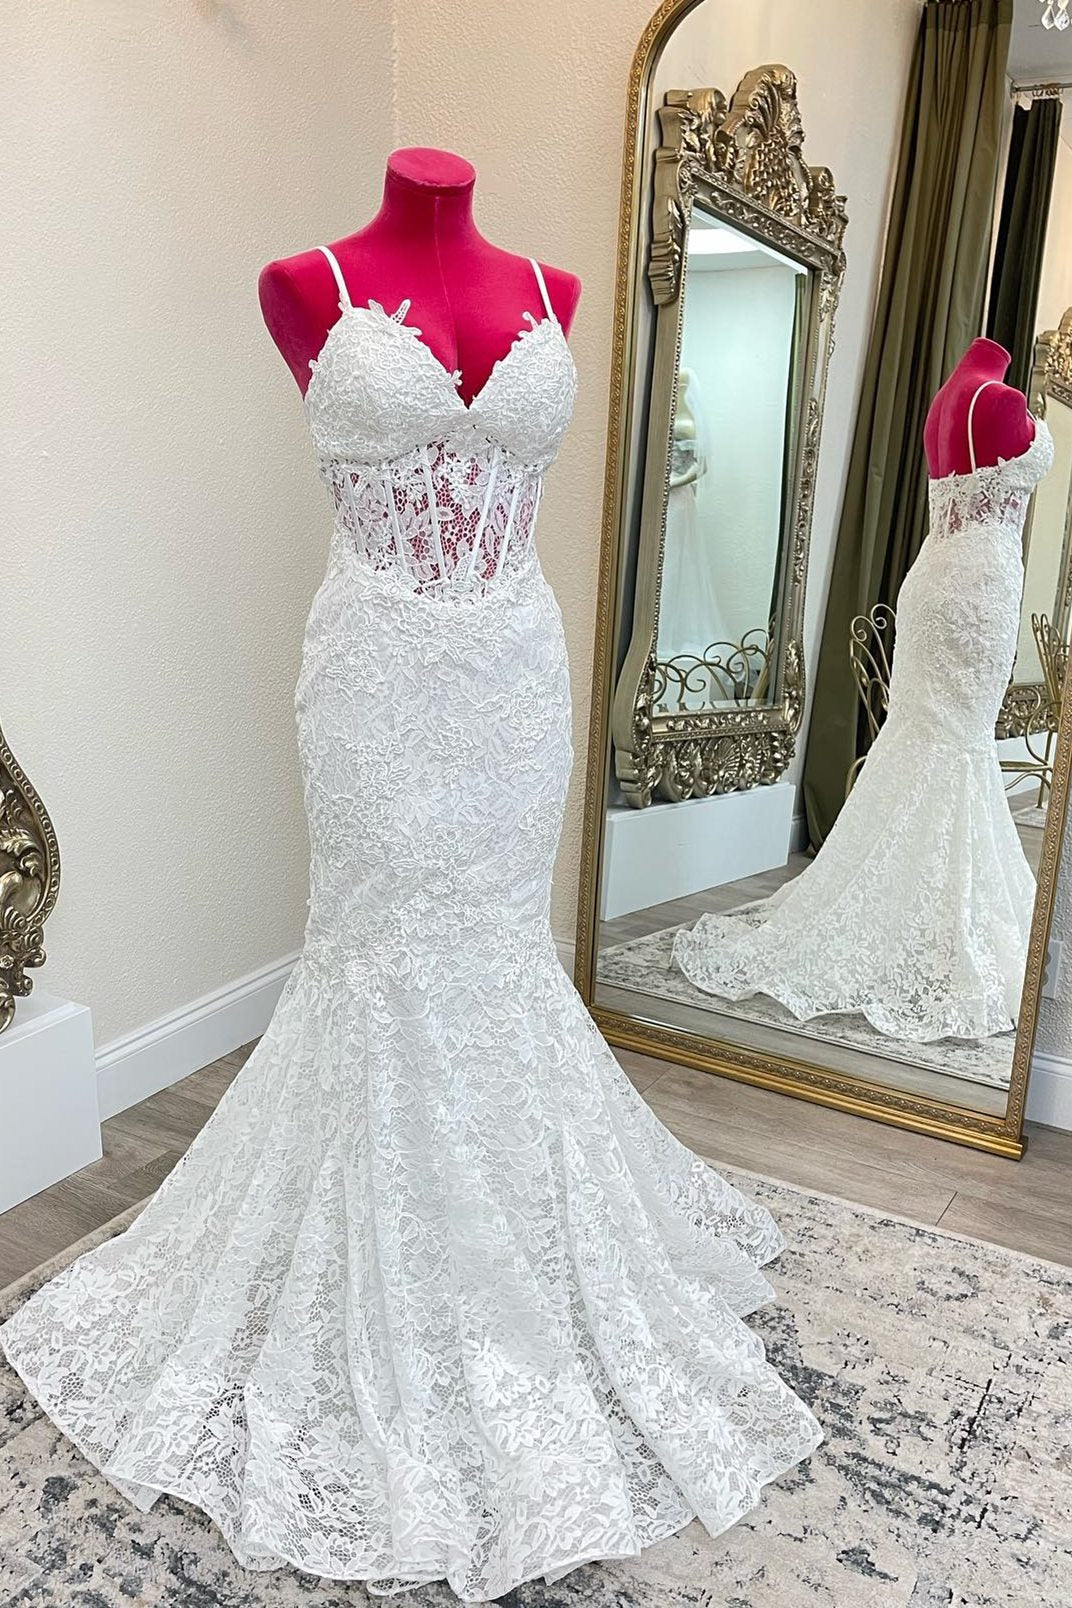 Wedding Dress Shopping Outfit, Mermaid White Lace Long Wedding Dress